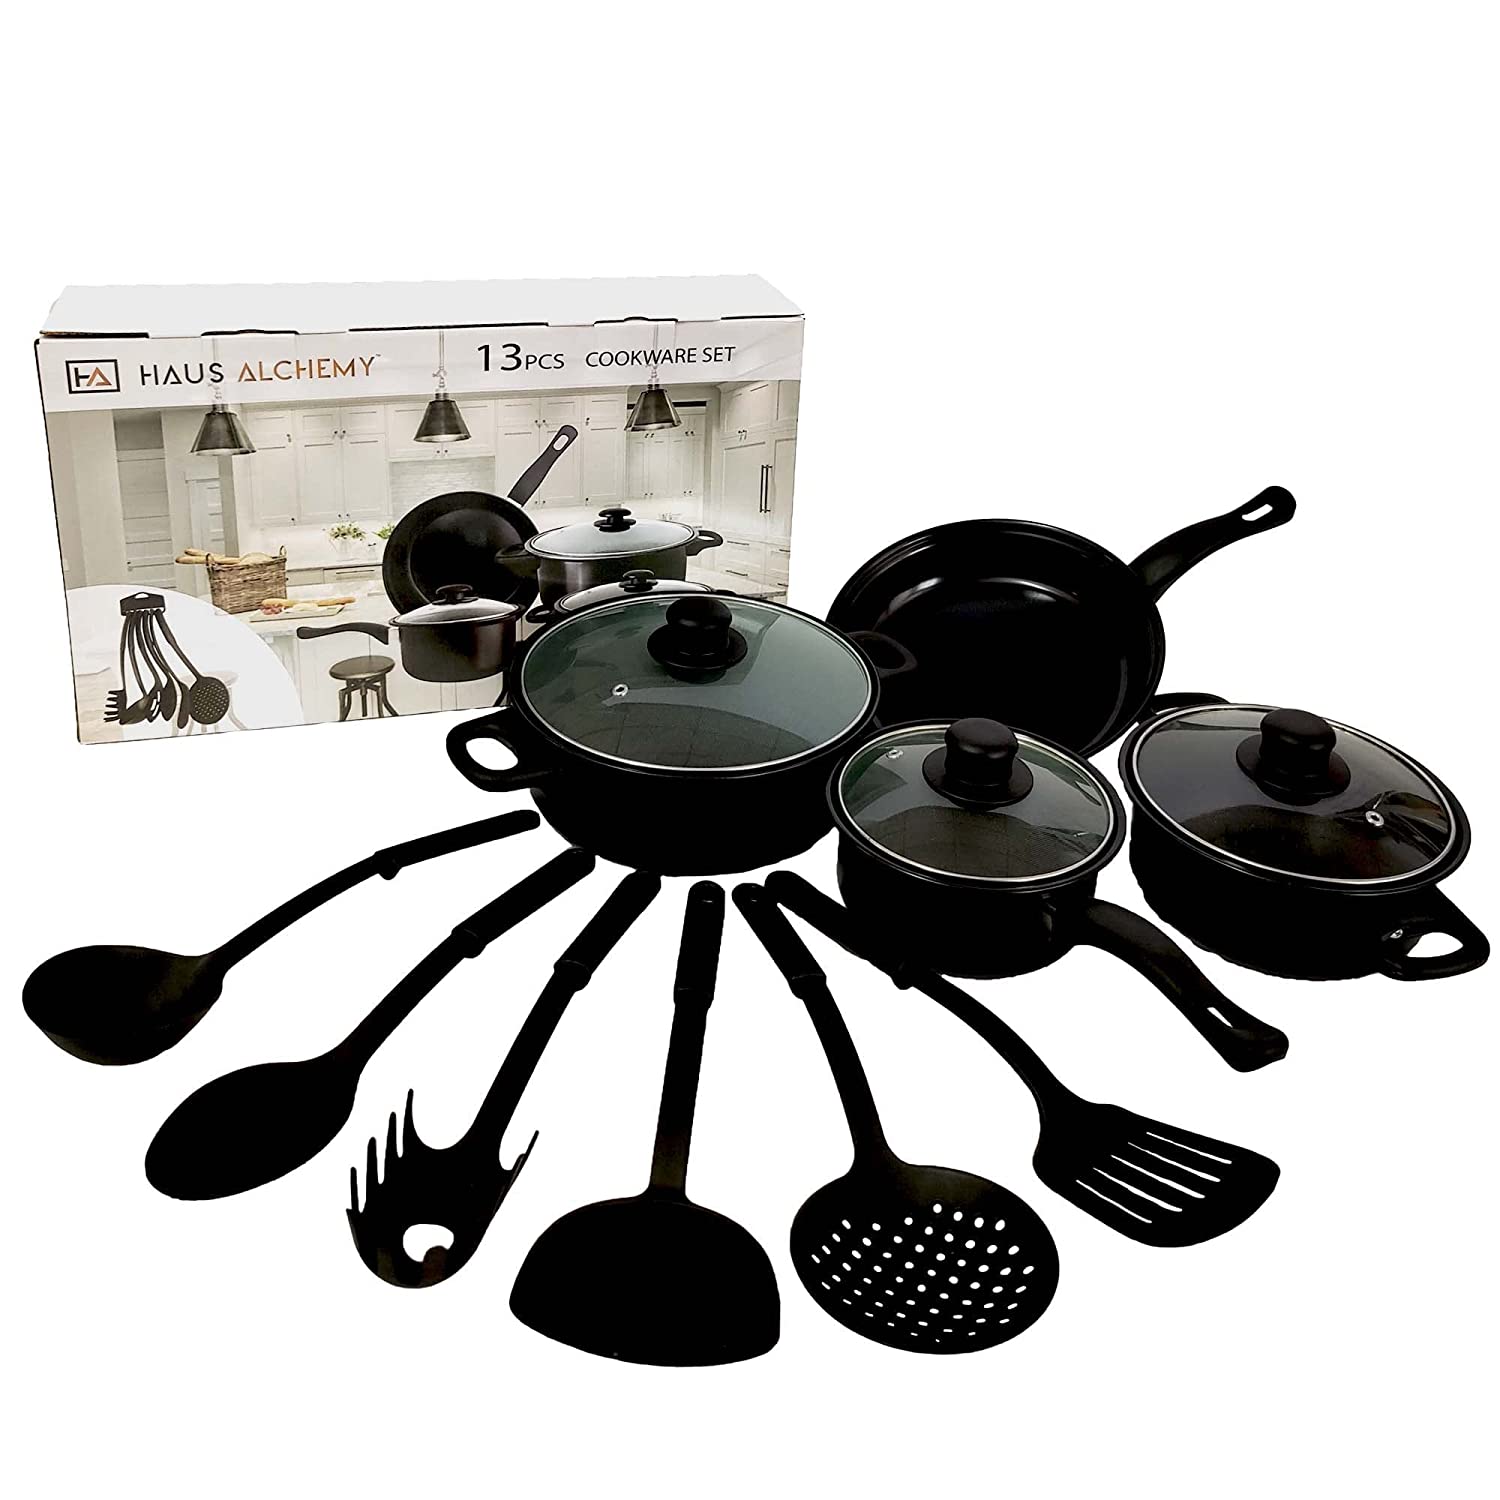 Haus Alchemy 13 Pieces Non-Stick Iron Kitchen Cookware Set with Lids Includes 1pc Frying Pan, 2Pcs Casserole, 1Pc Sause Pan with 3 Lids & 6Pcs Ladle Set Induction Safe, Beginner Cooking Kit